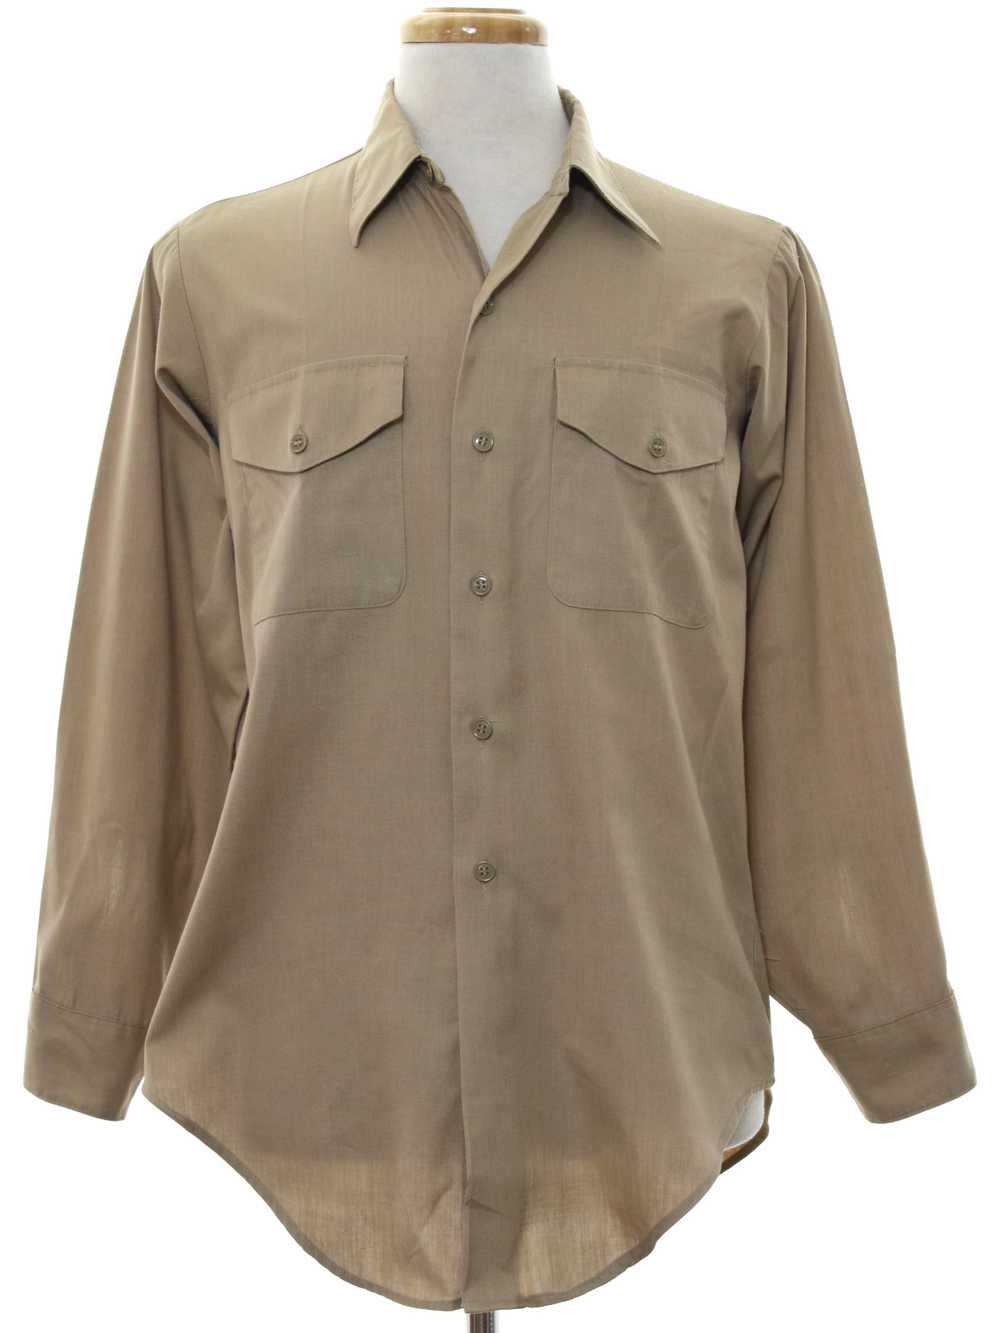 1960's Mens Uniform Shirt - image 1